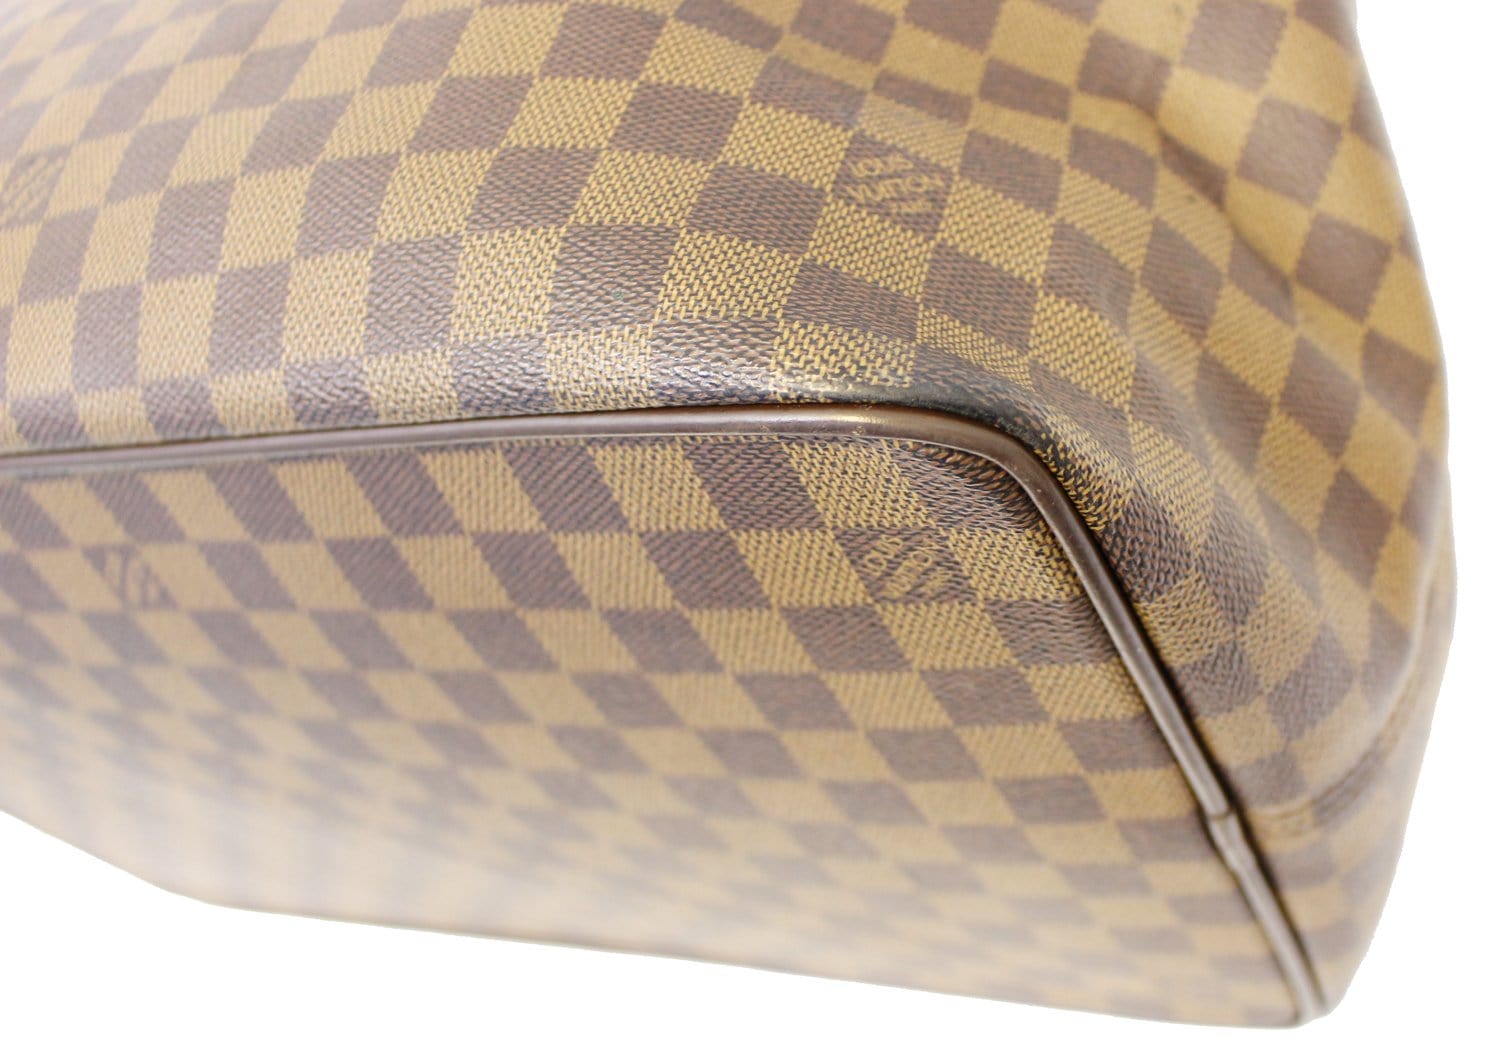 Louis Vuitton Greenwich Travel bag 359217